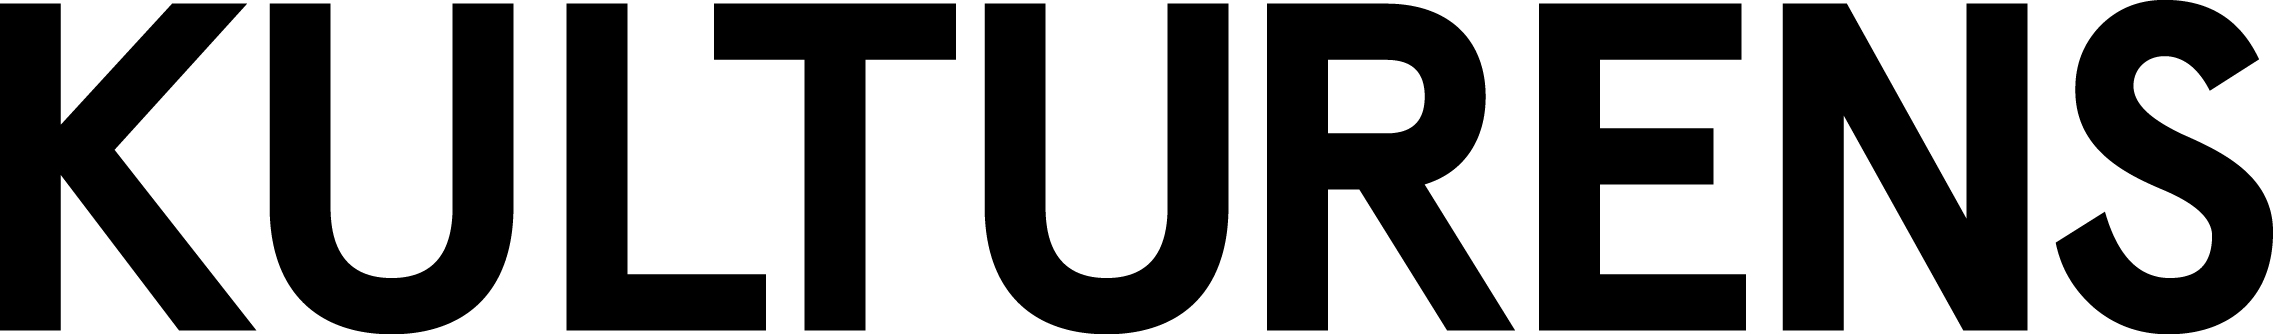 kulturens logo svart 1